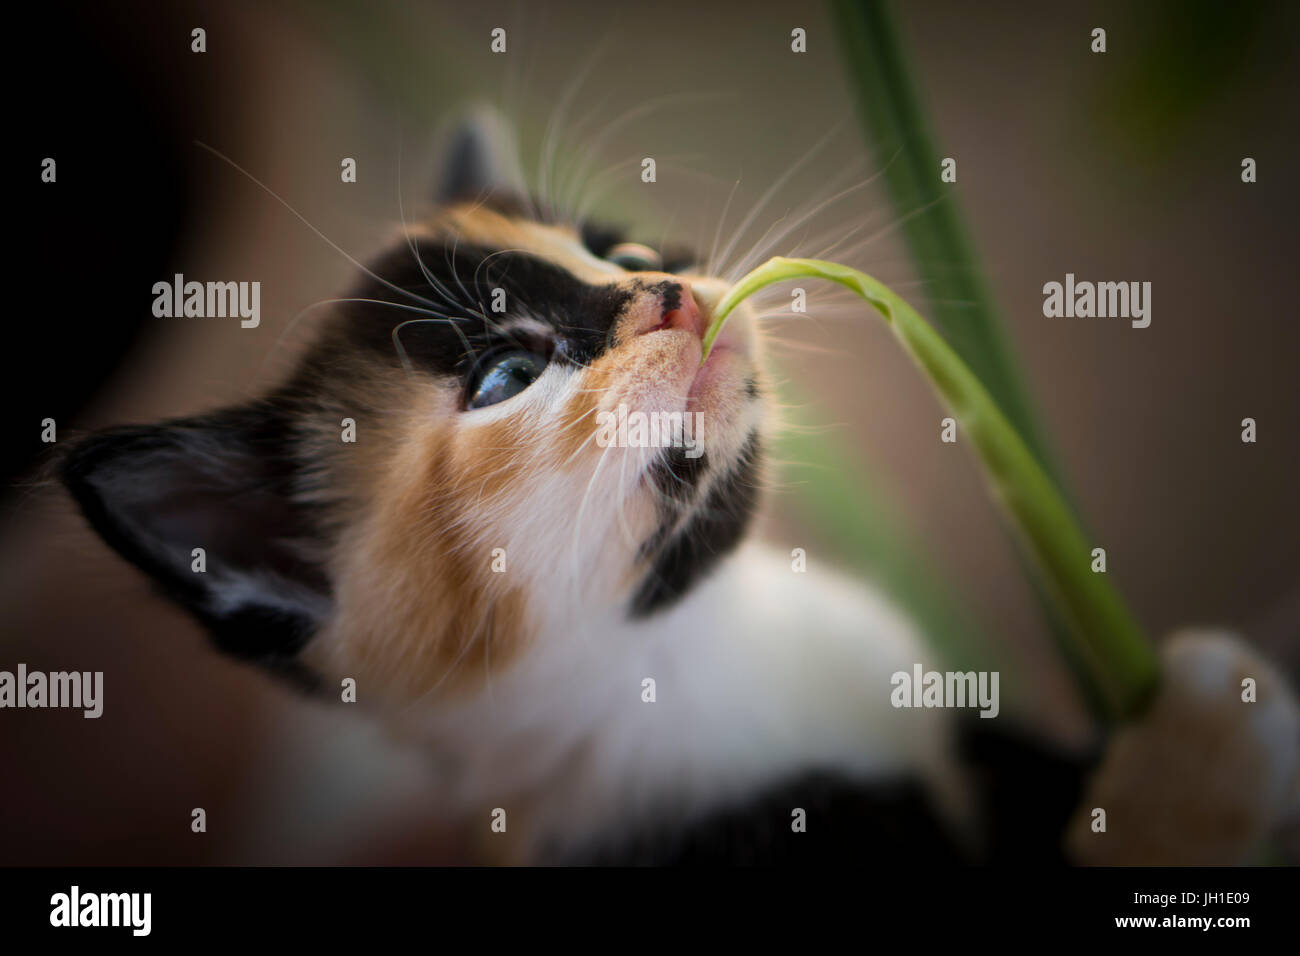 Kitty Katze beißt eine Pflanze Stockfoto